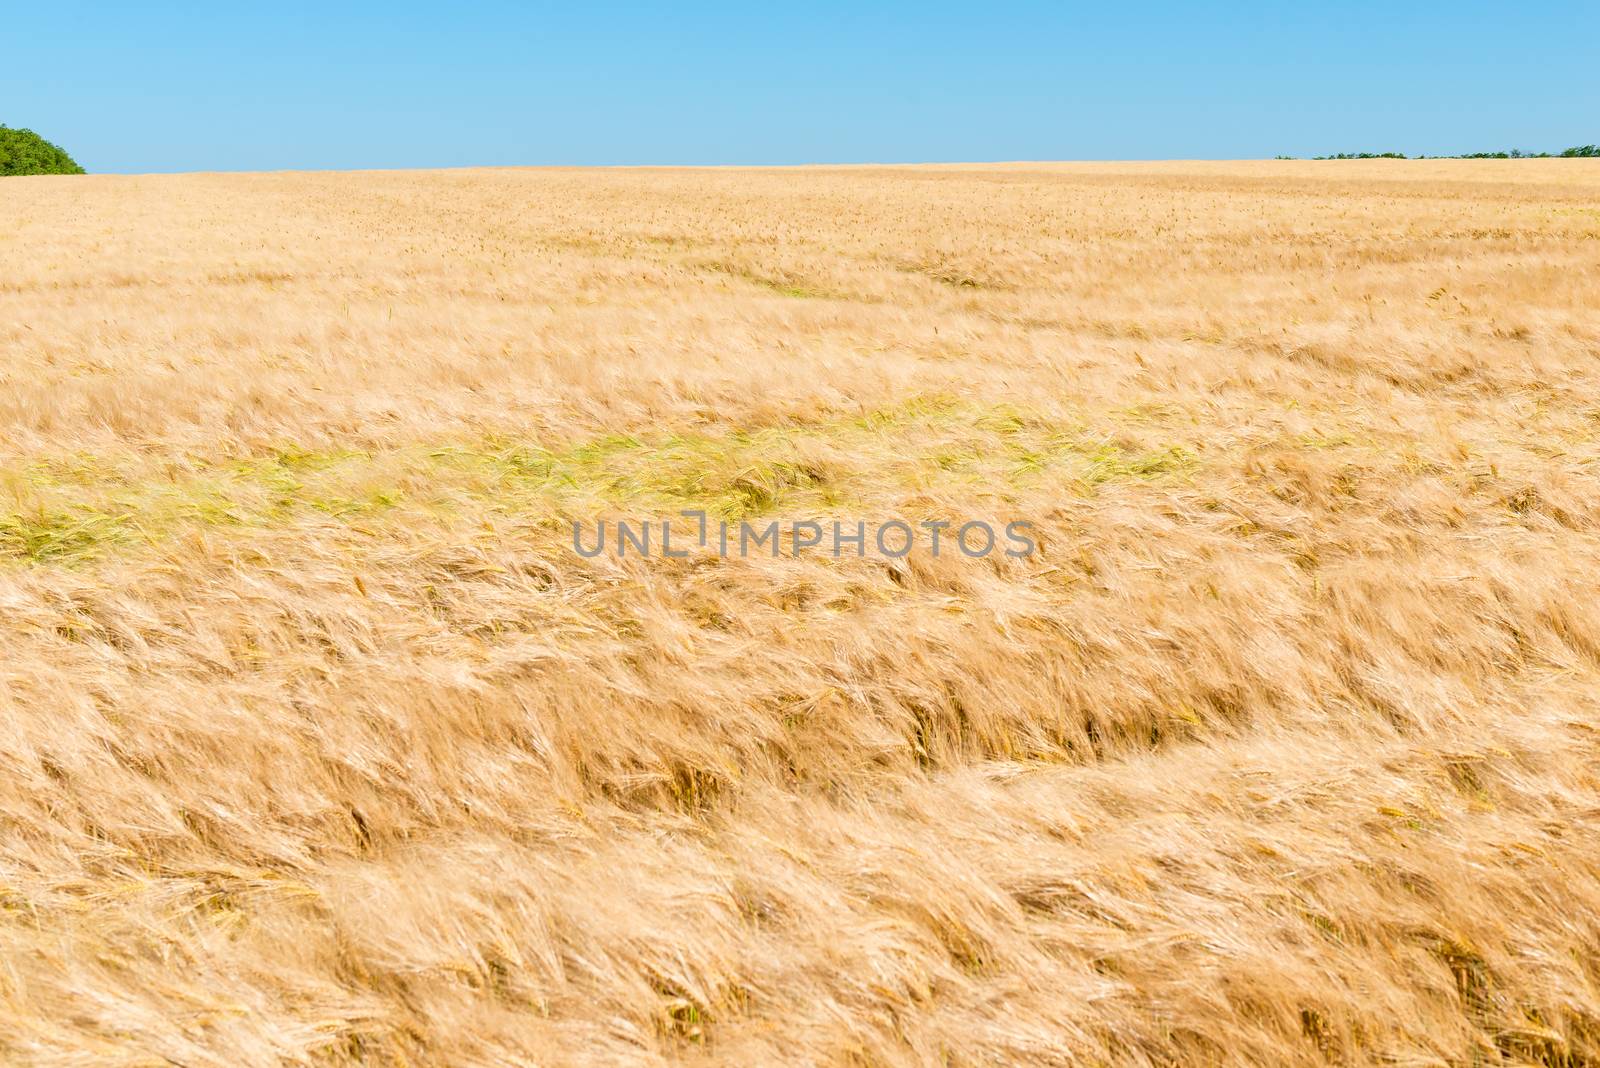 Ears of yellow wheat and horizon line